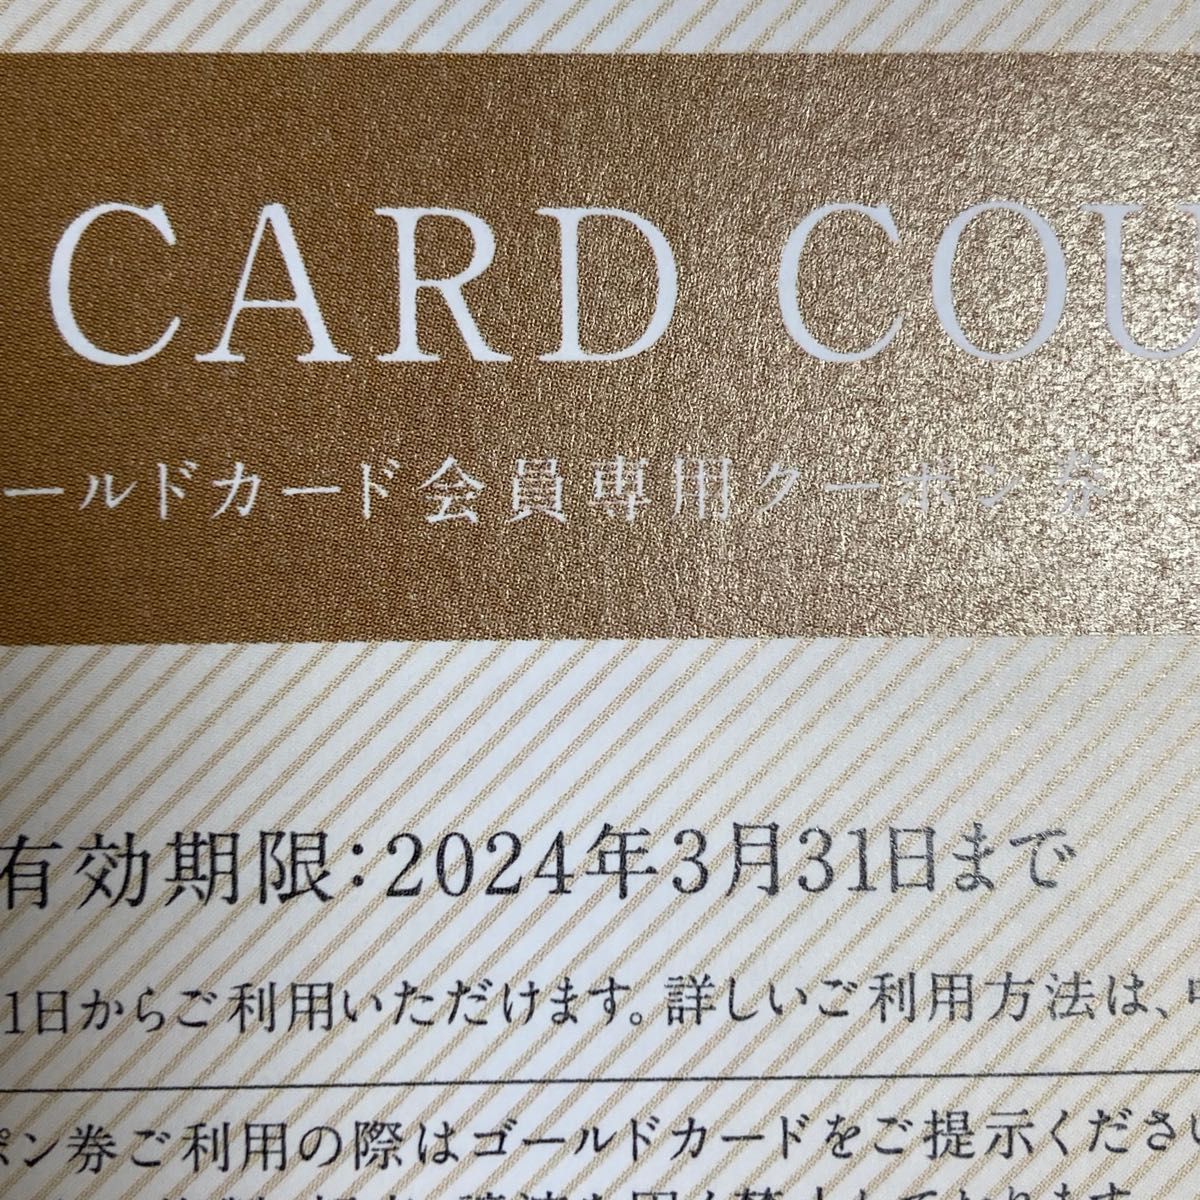 GOLD CARD COUPON 三越伊勢丹 ゴールドカードクーポン MIカード